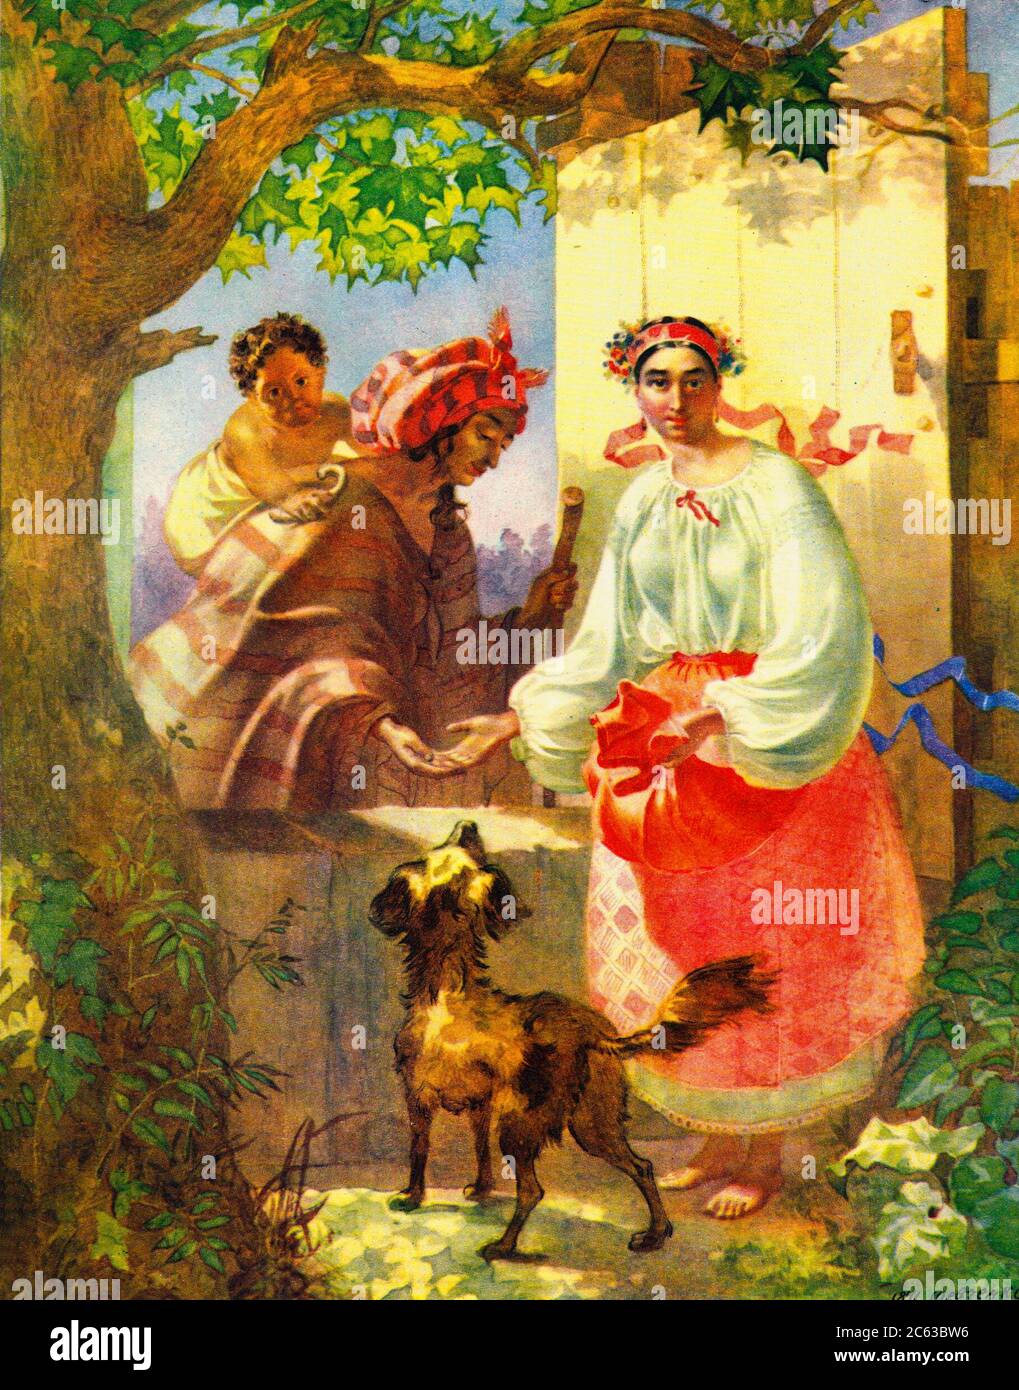 Gypsy Fortune-Teller - Taras Shevchenko, 1841 Stock Photo